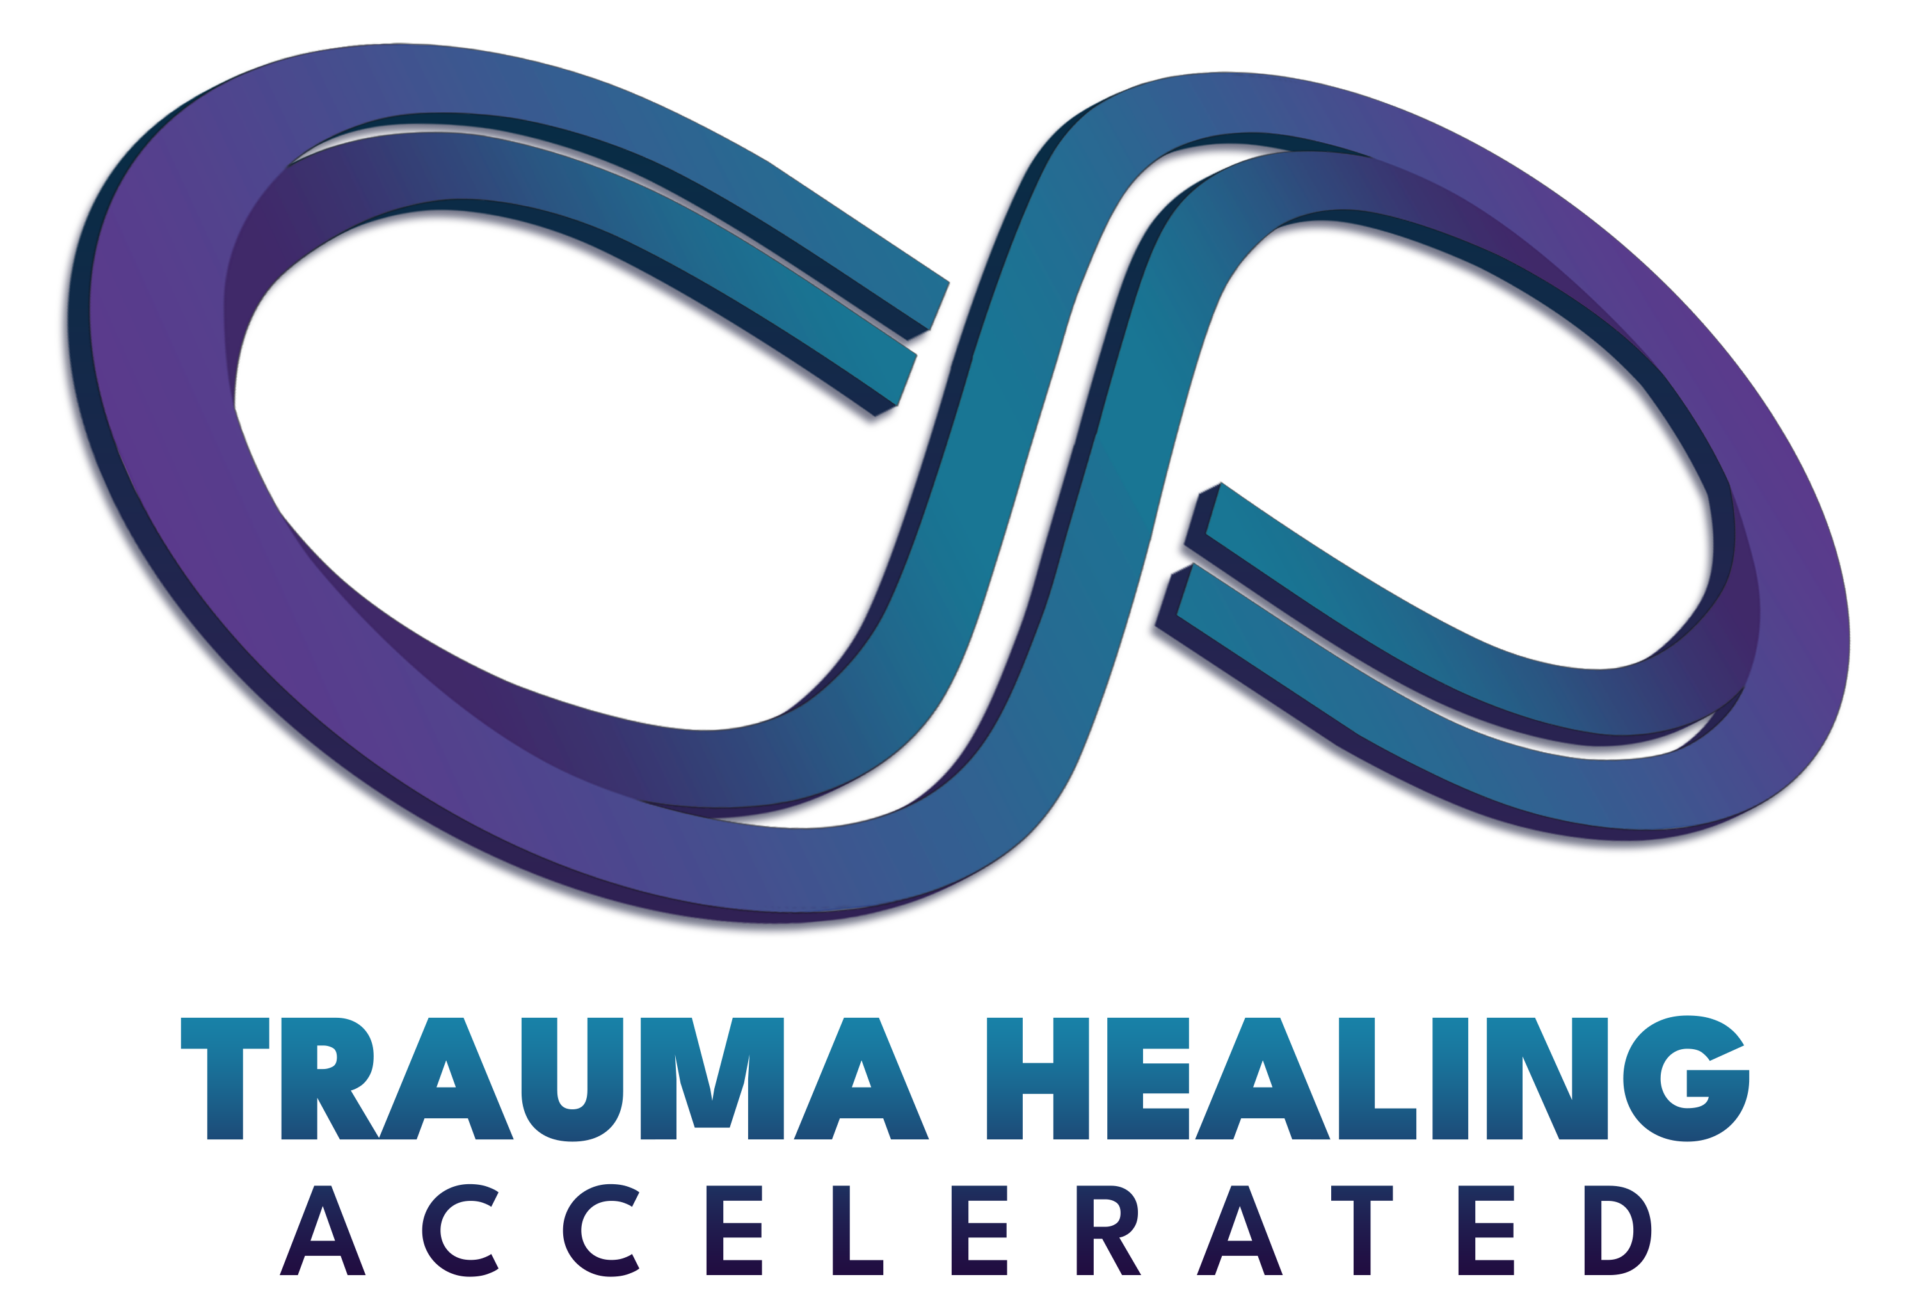 trauma healing accelerated colored logo